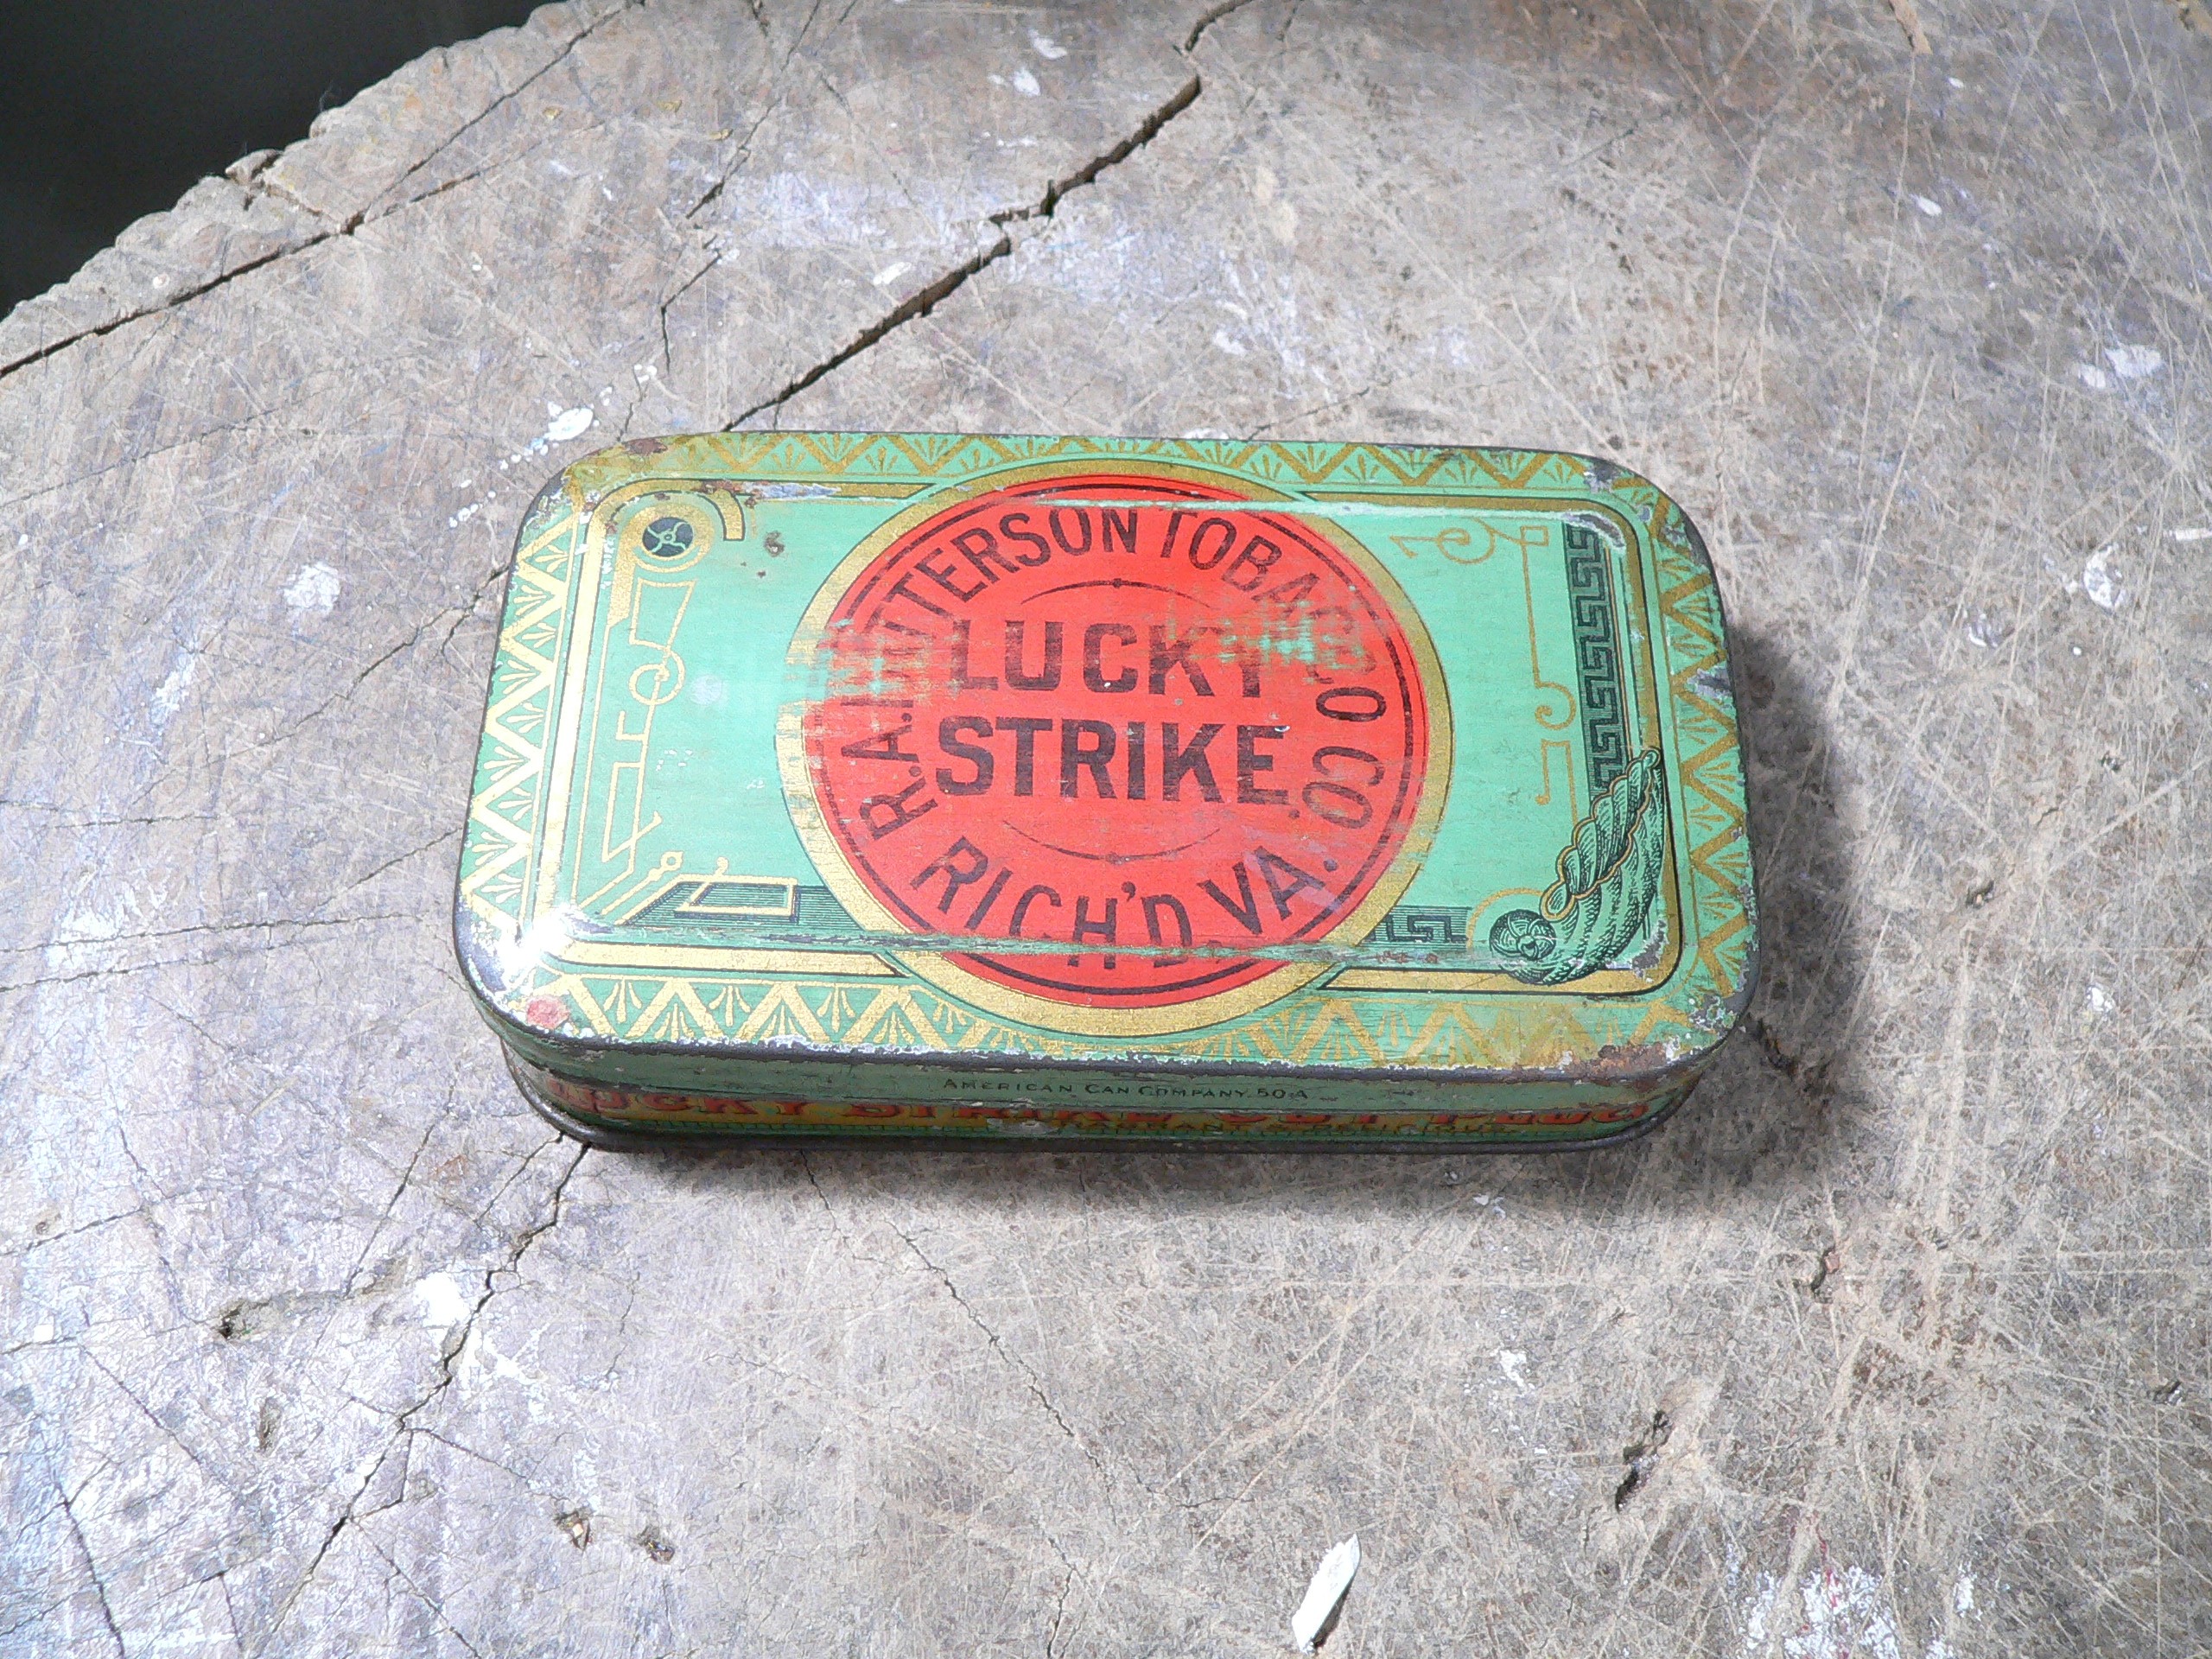 Boite Lucky strike antique # 9139.2